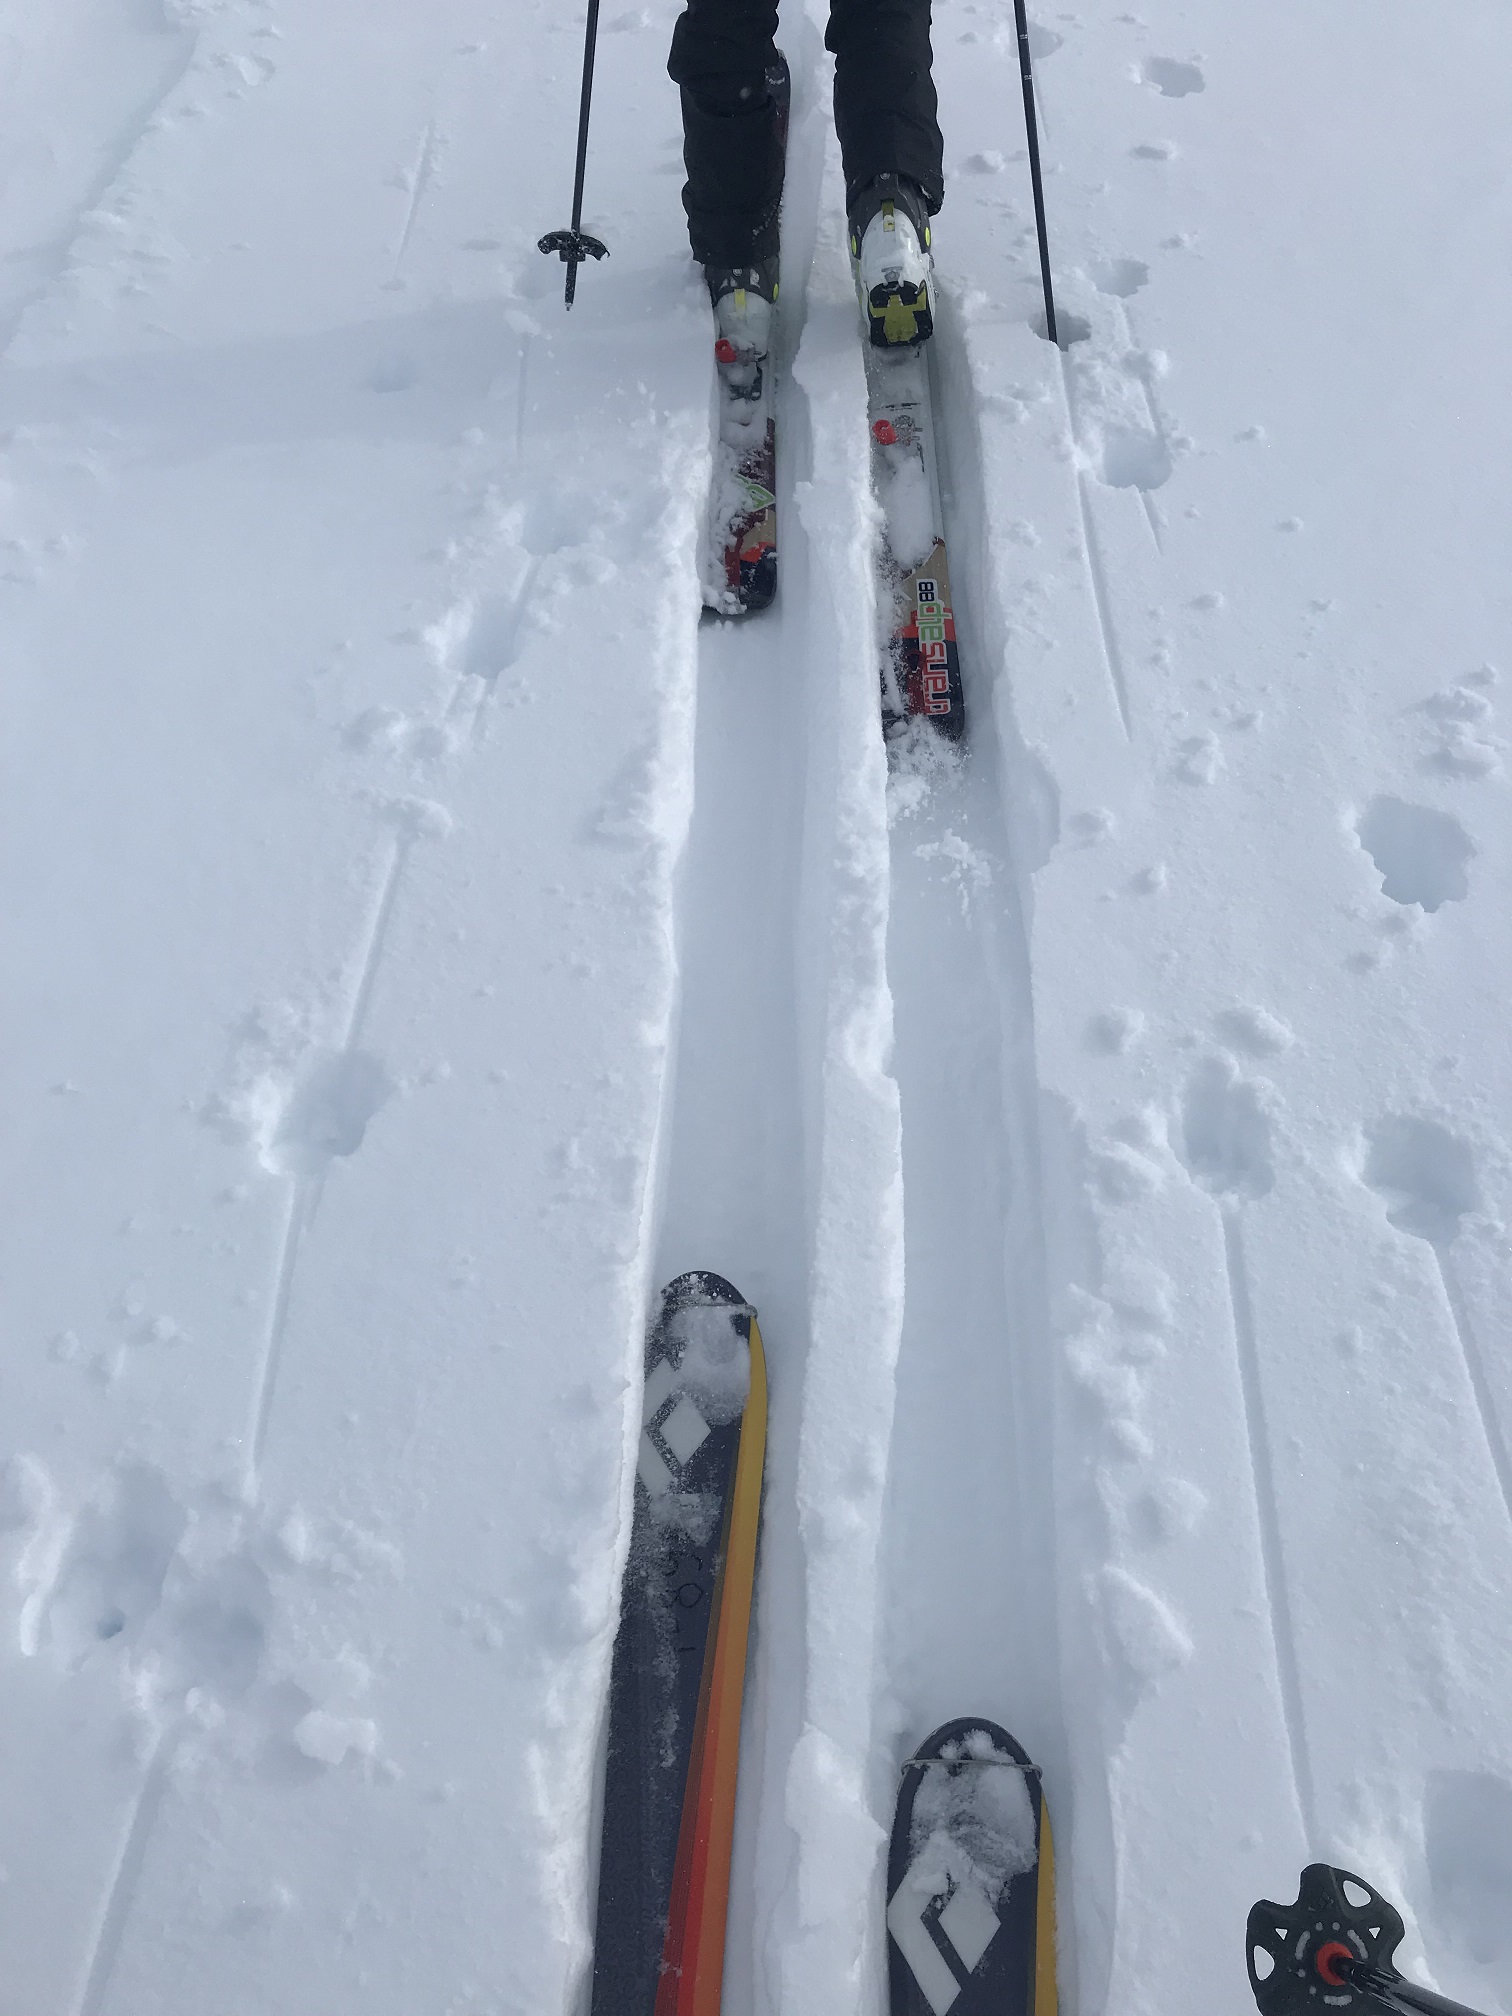 Following a ski trail